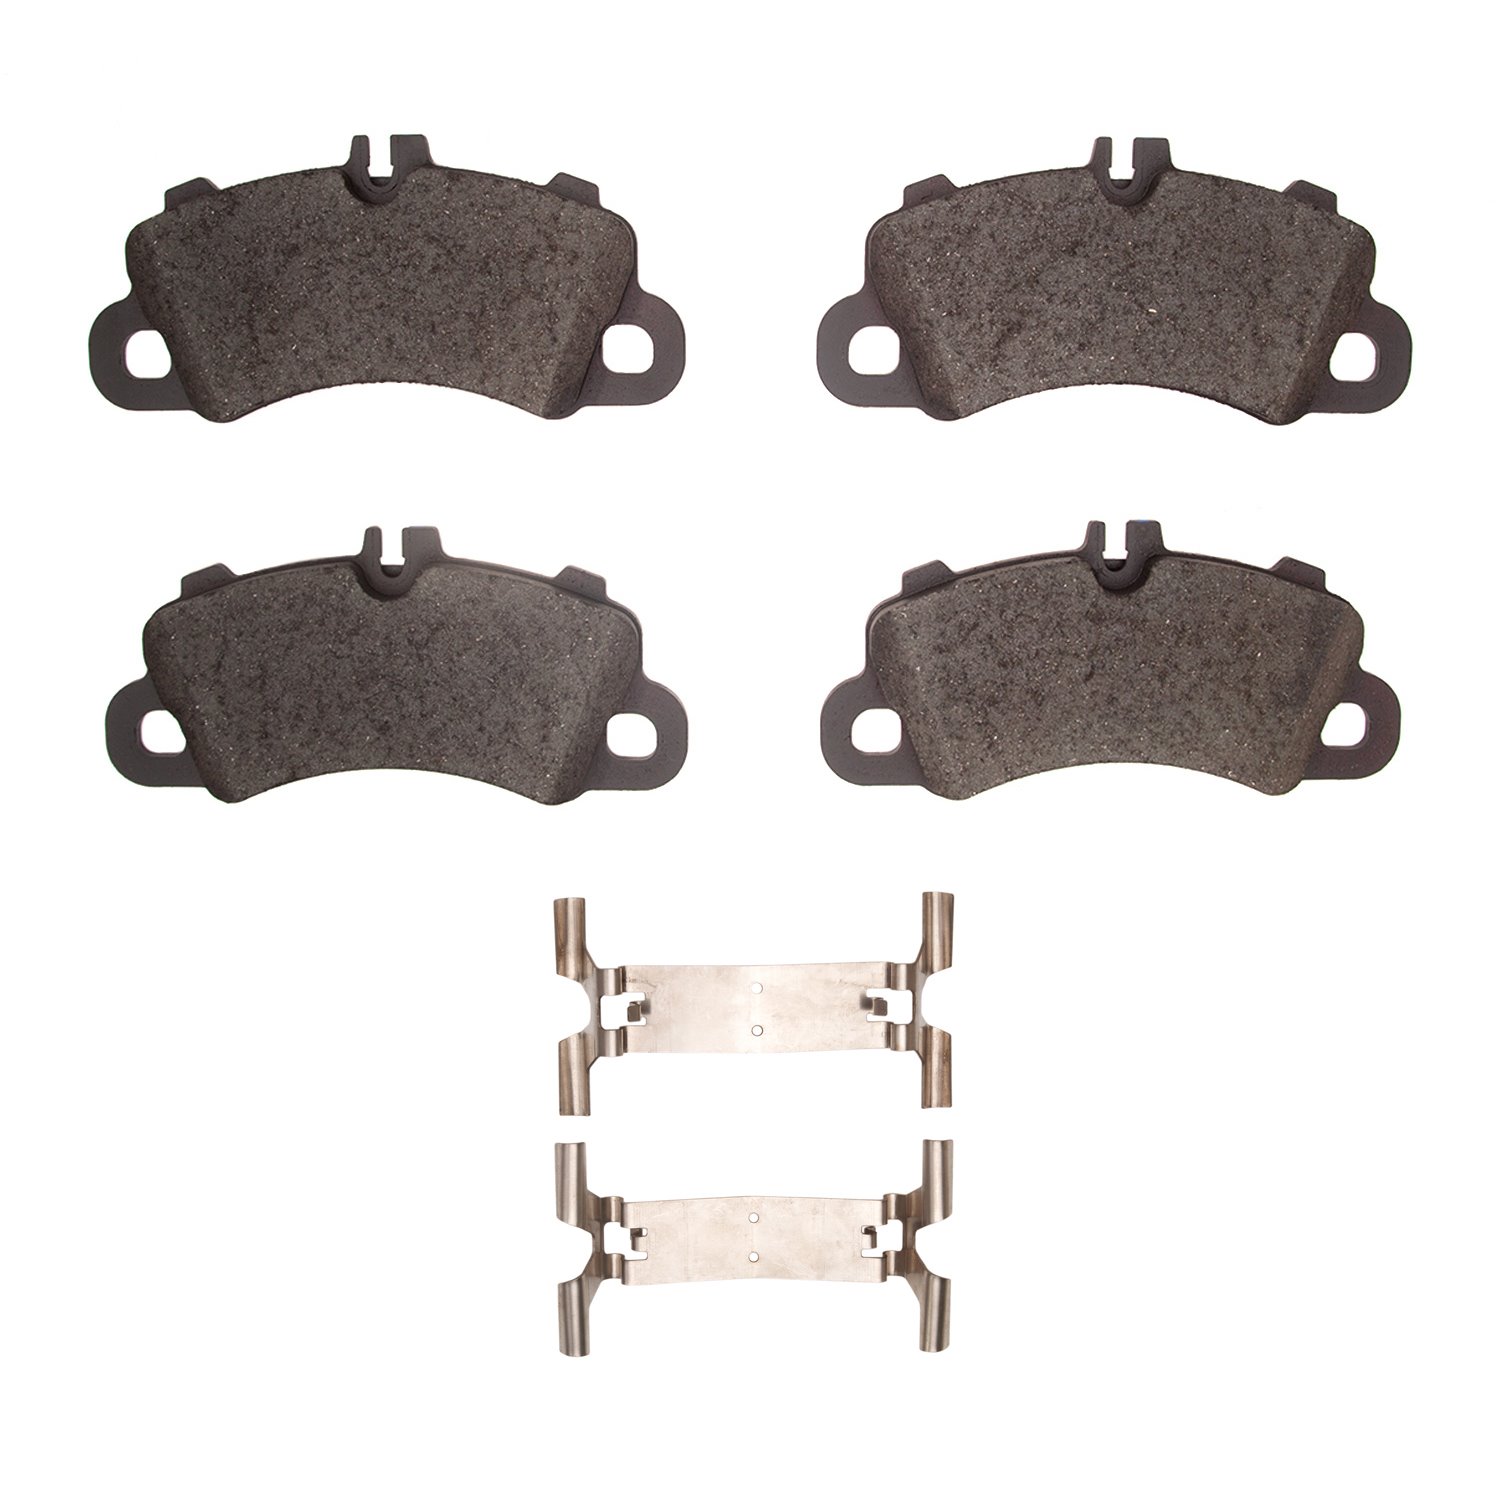 1310-2192-01 3000-Series Ceramic Brake Pads & Hardware Kit, 2019-2020 Porsche, Position: Front